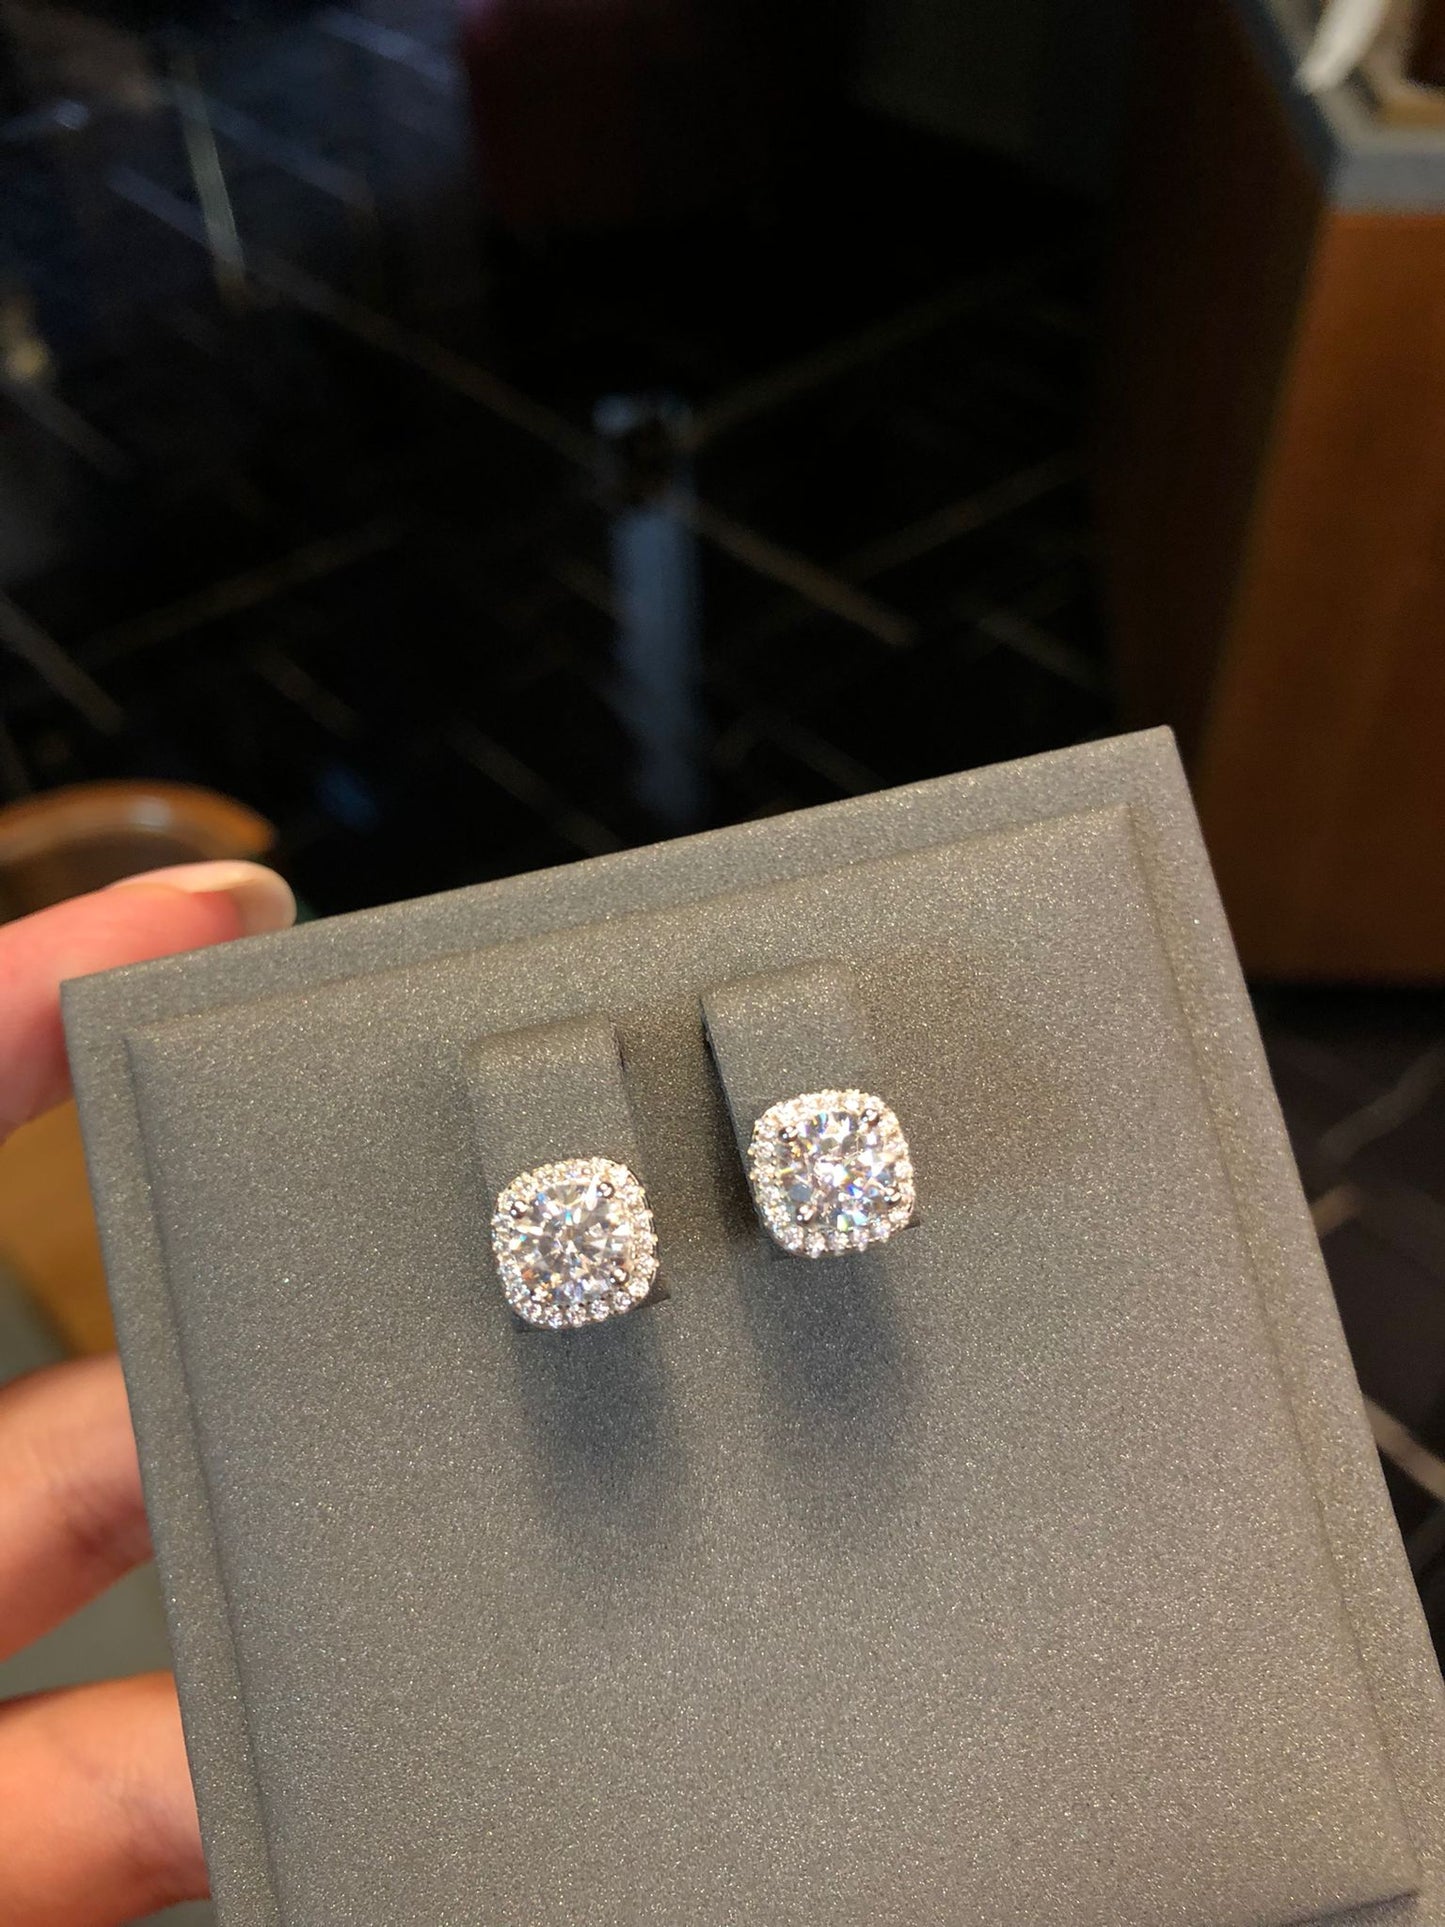 AJ -  Earrings with cushion cut white stones